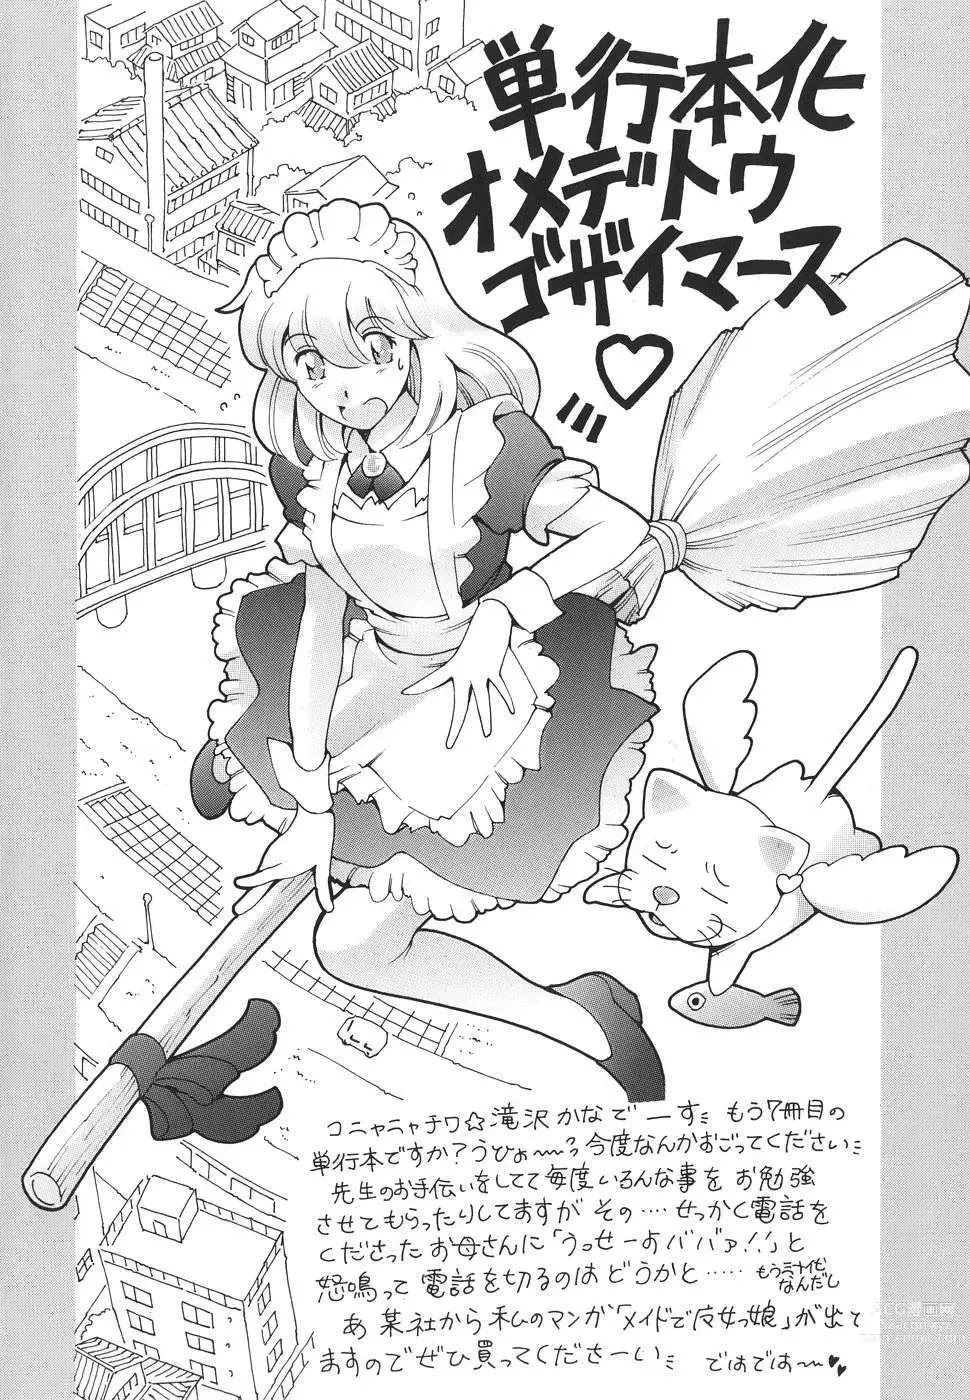 Page 192 of manga Katei no Jijou - Familys circumstances